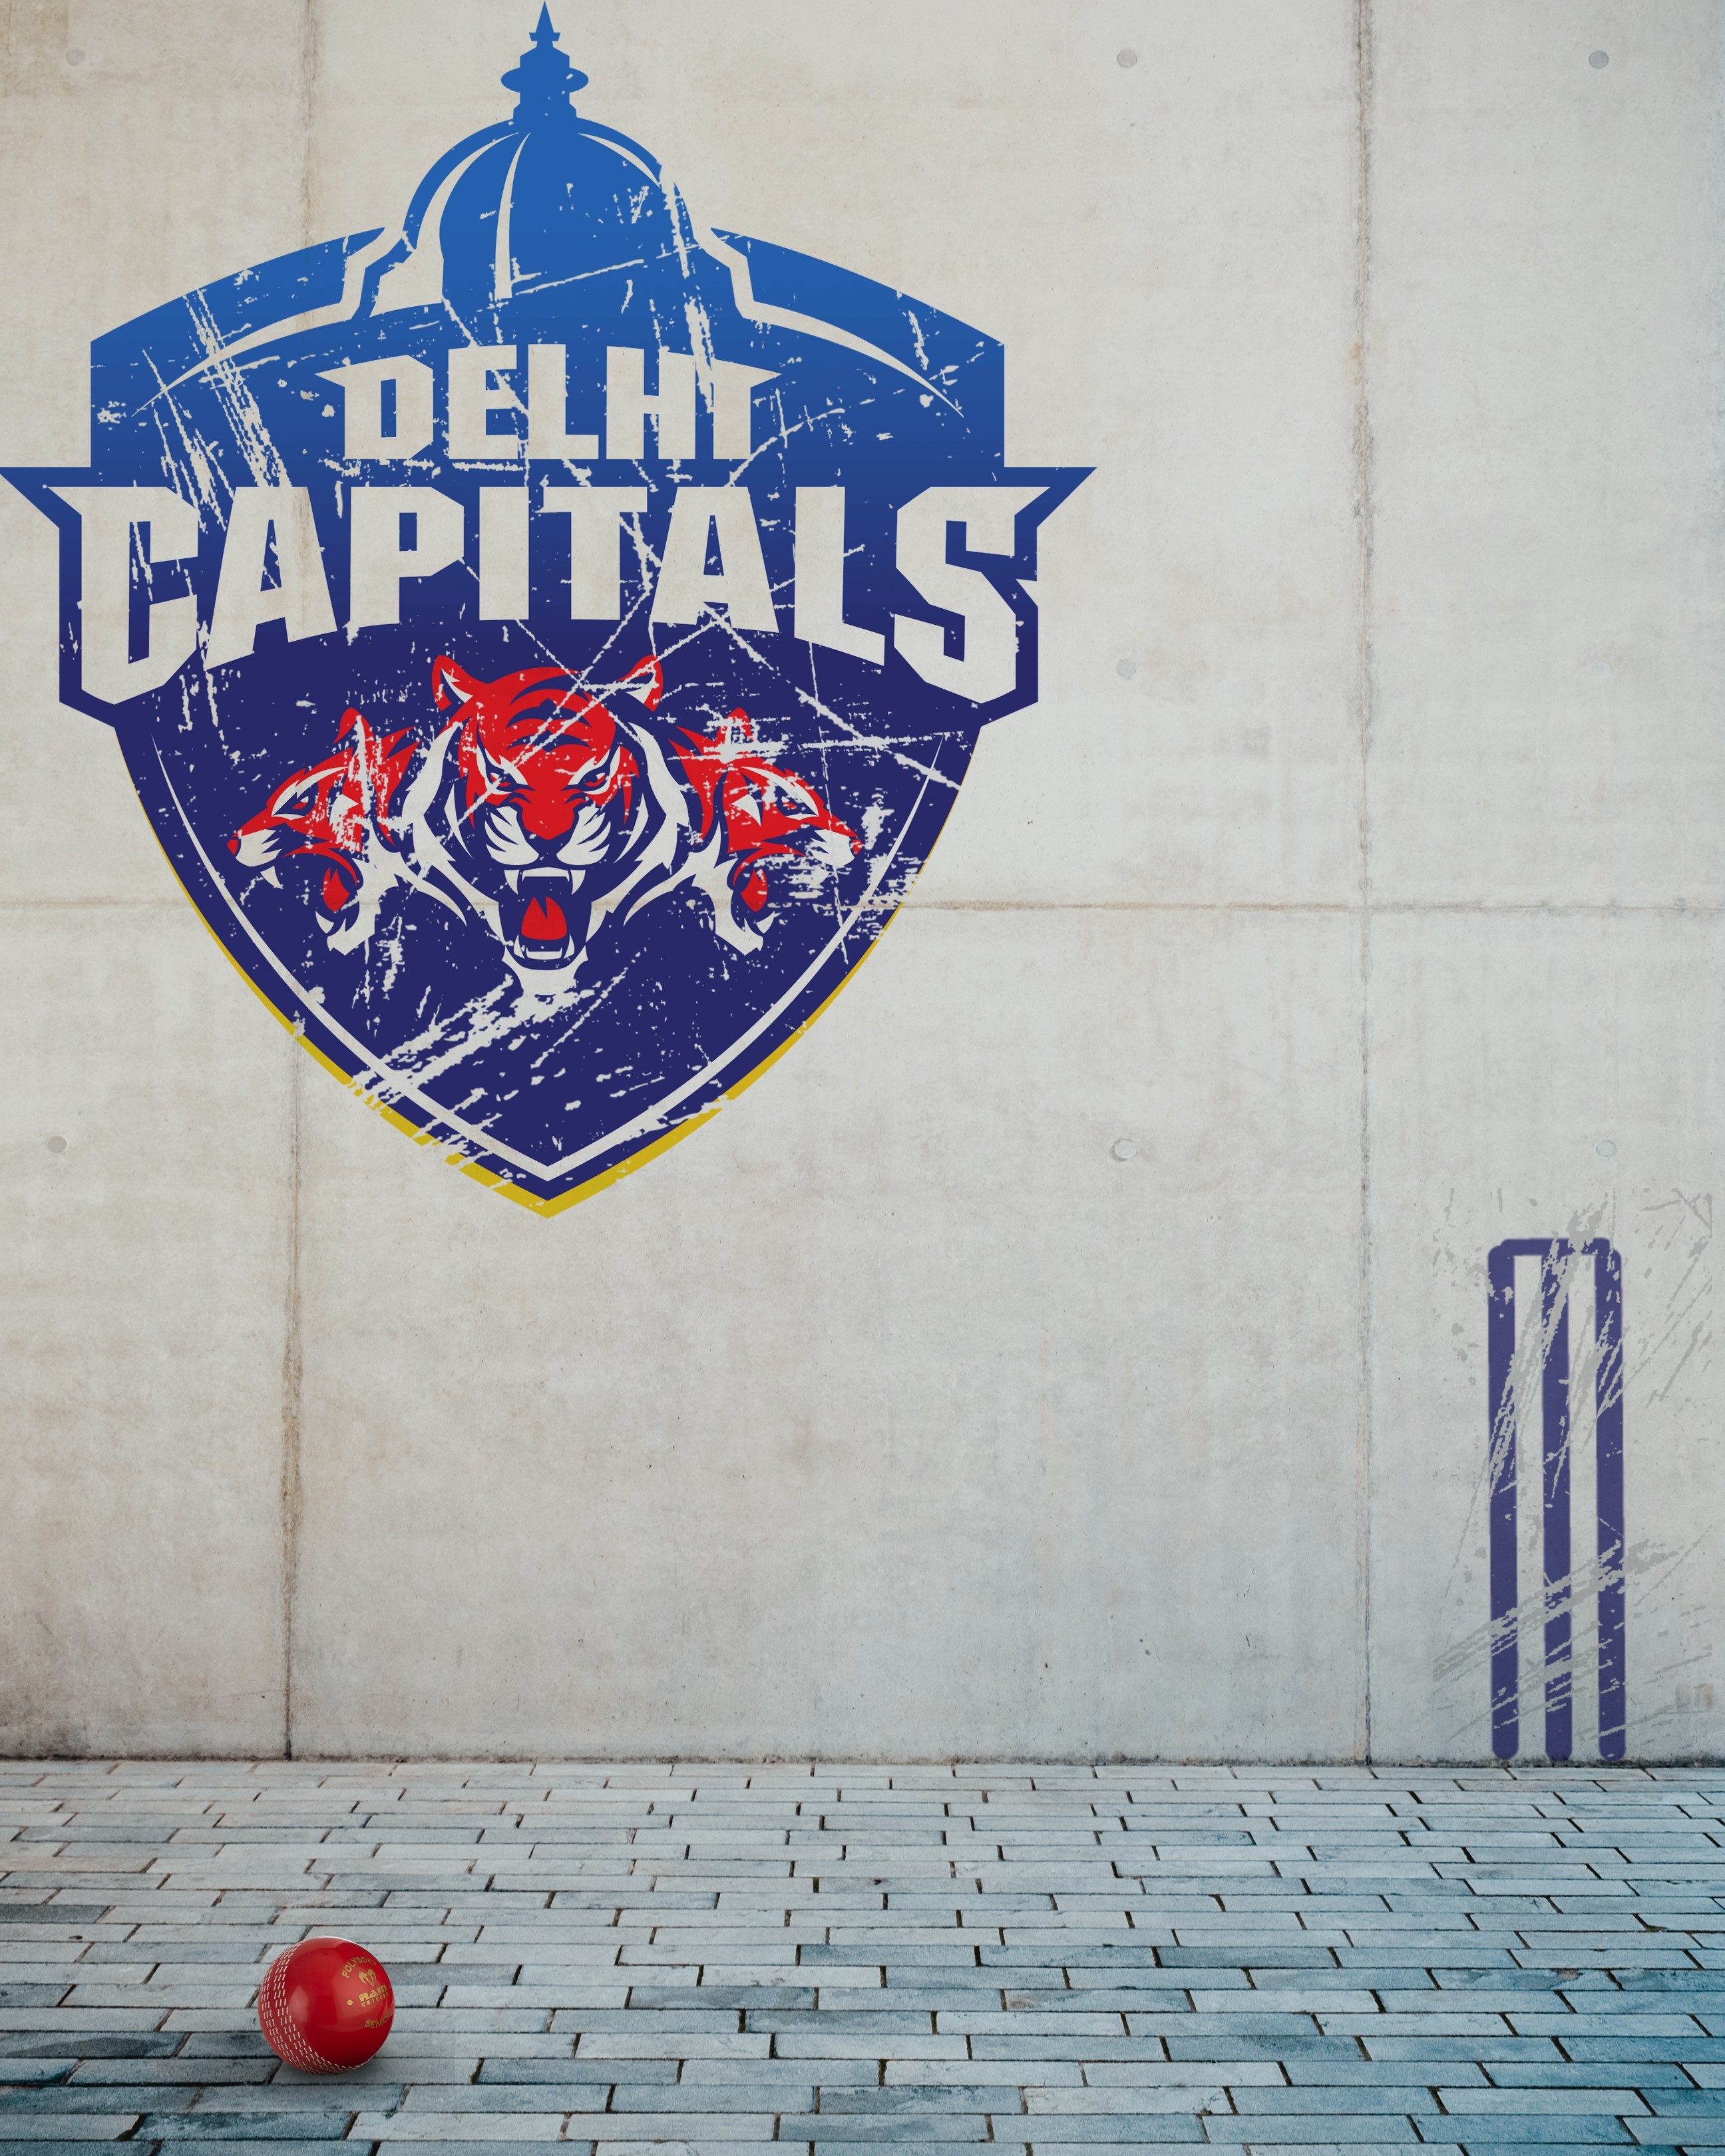 Buy Delhi Capitals Wild - Fridge Magnets from Fancode Shop